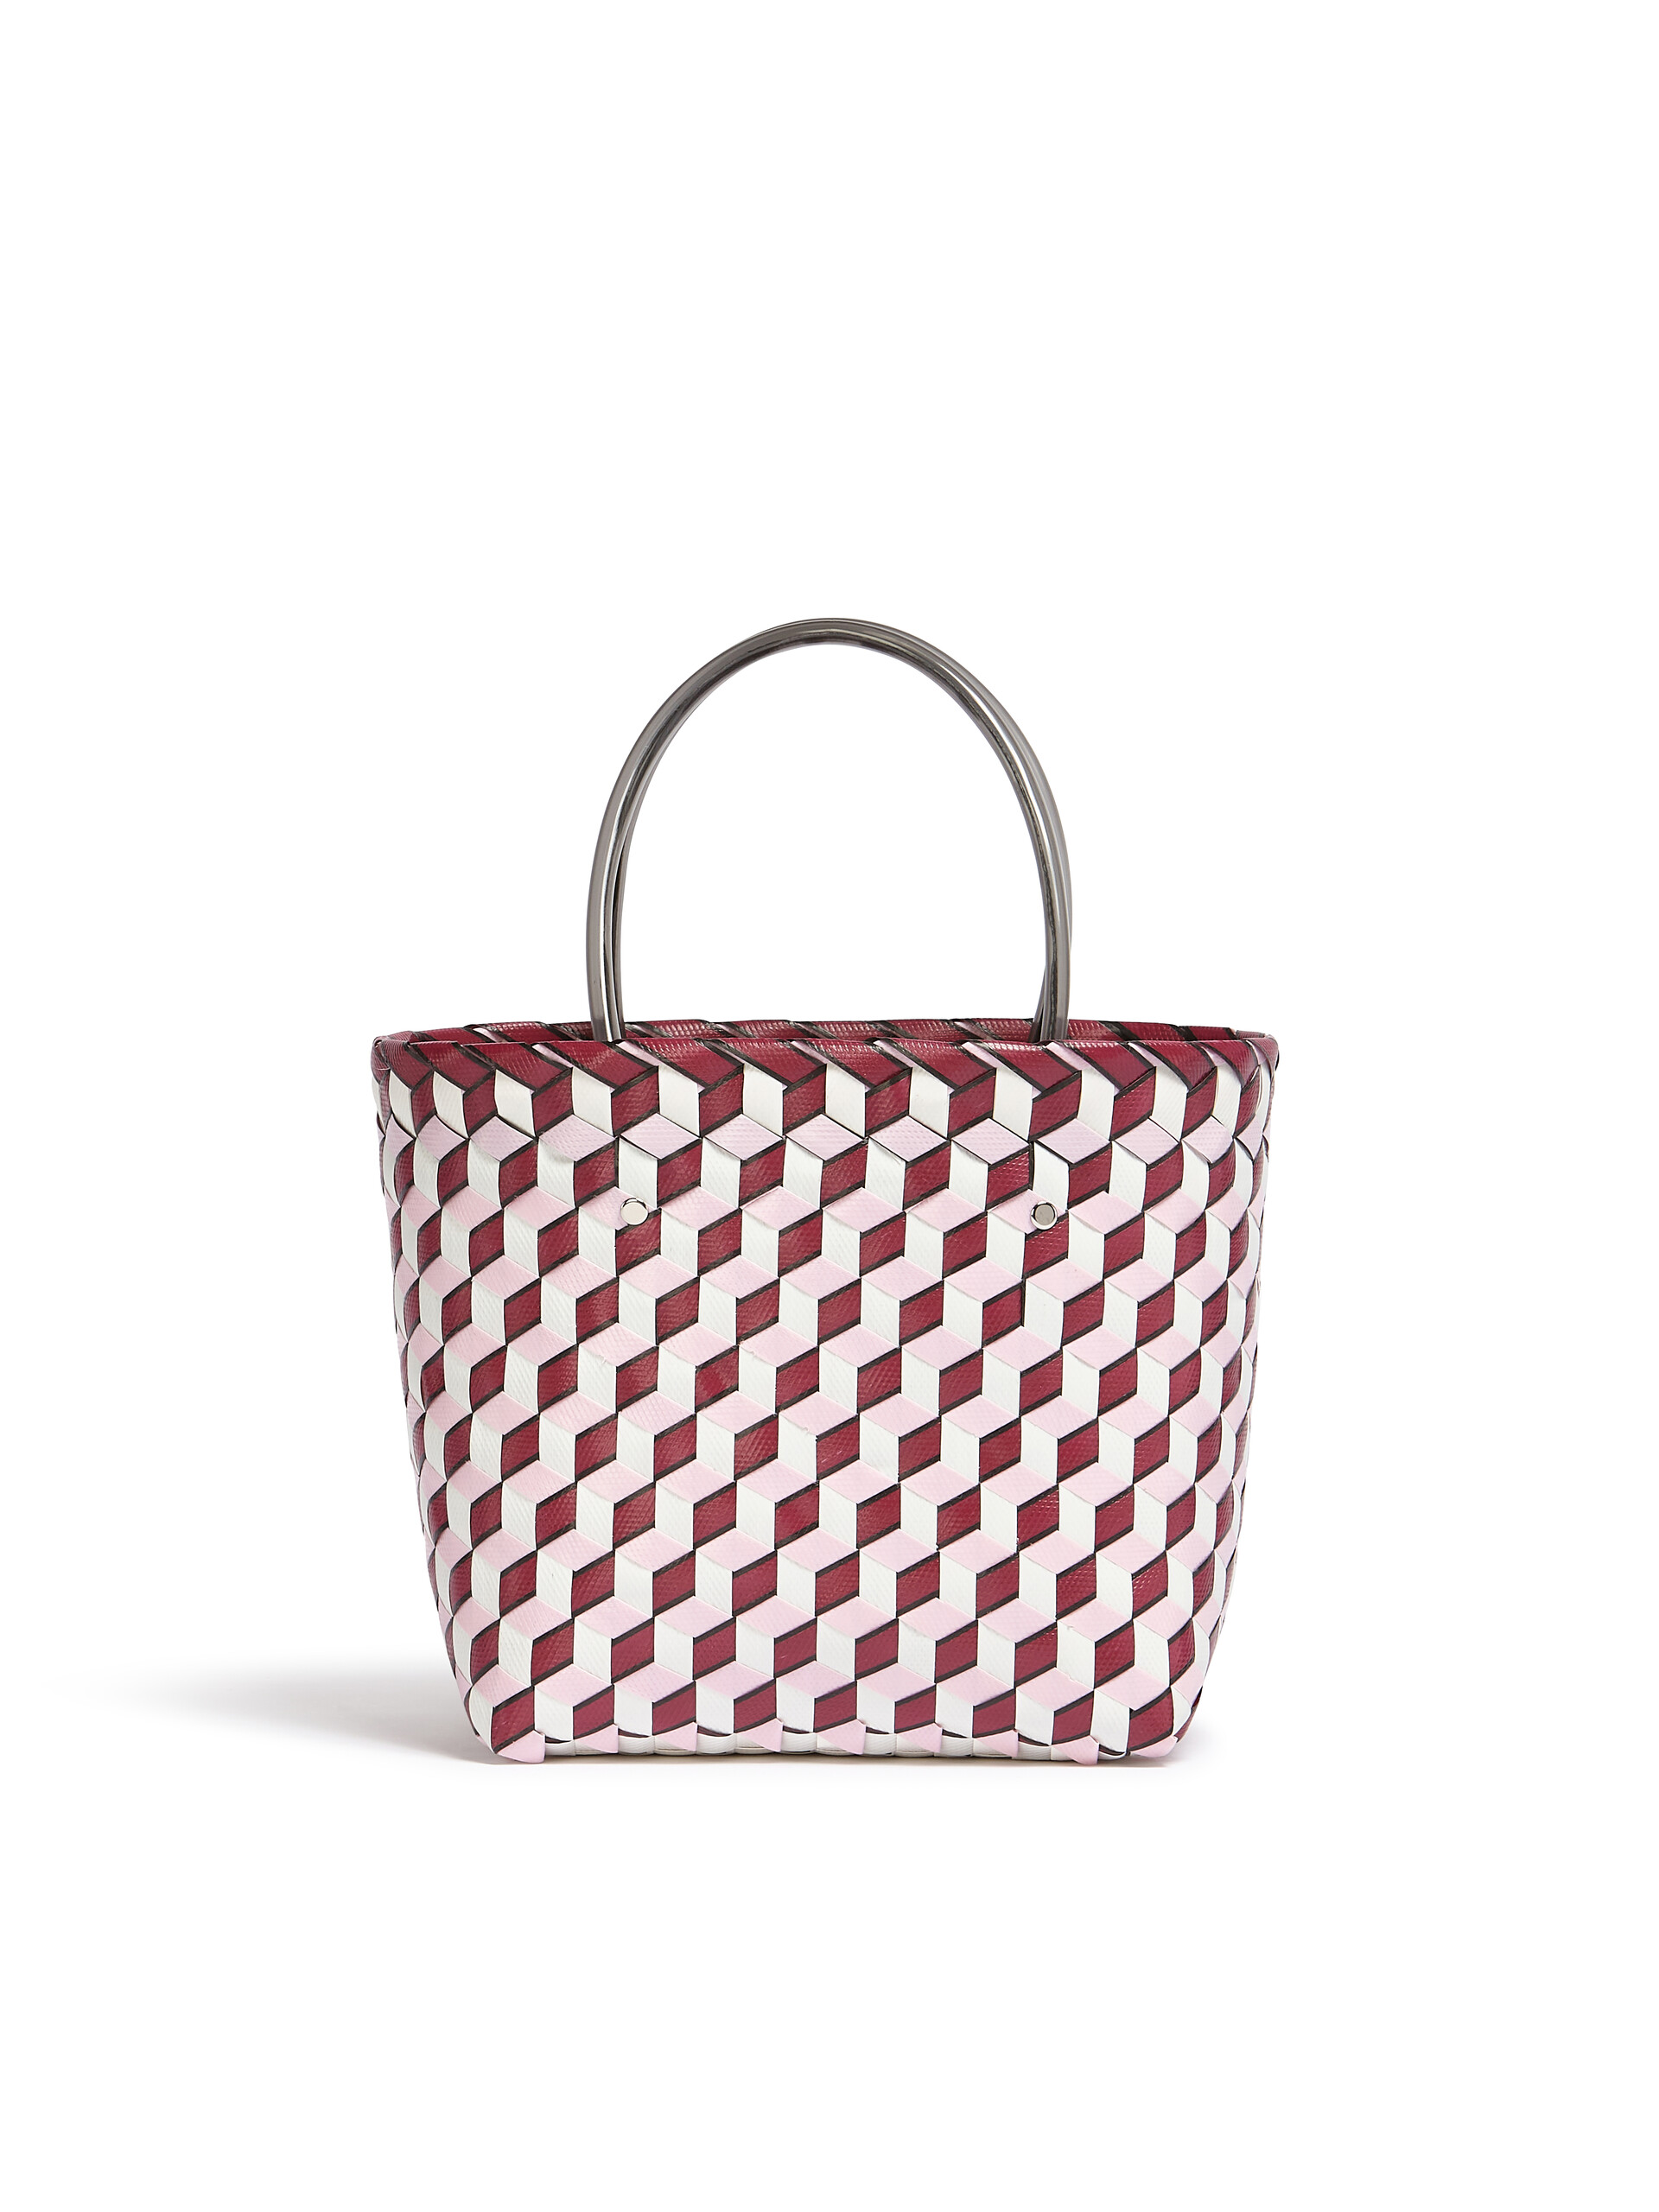 MARNI MARKET bag in burgundy cube woven material - Bags - Image 3